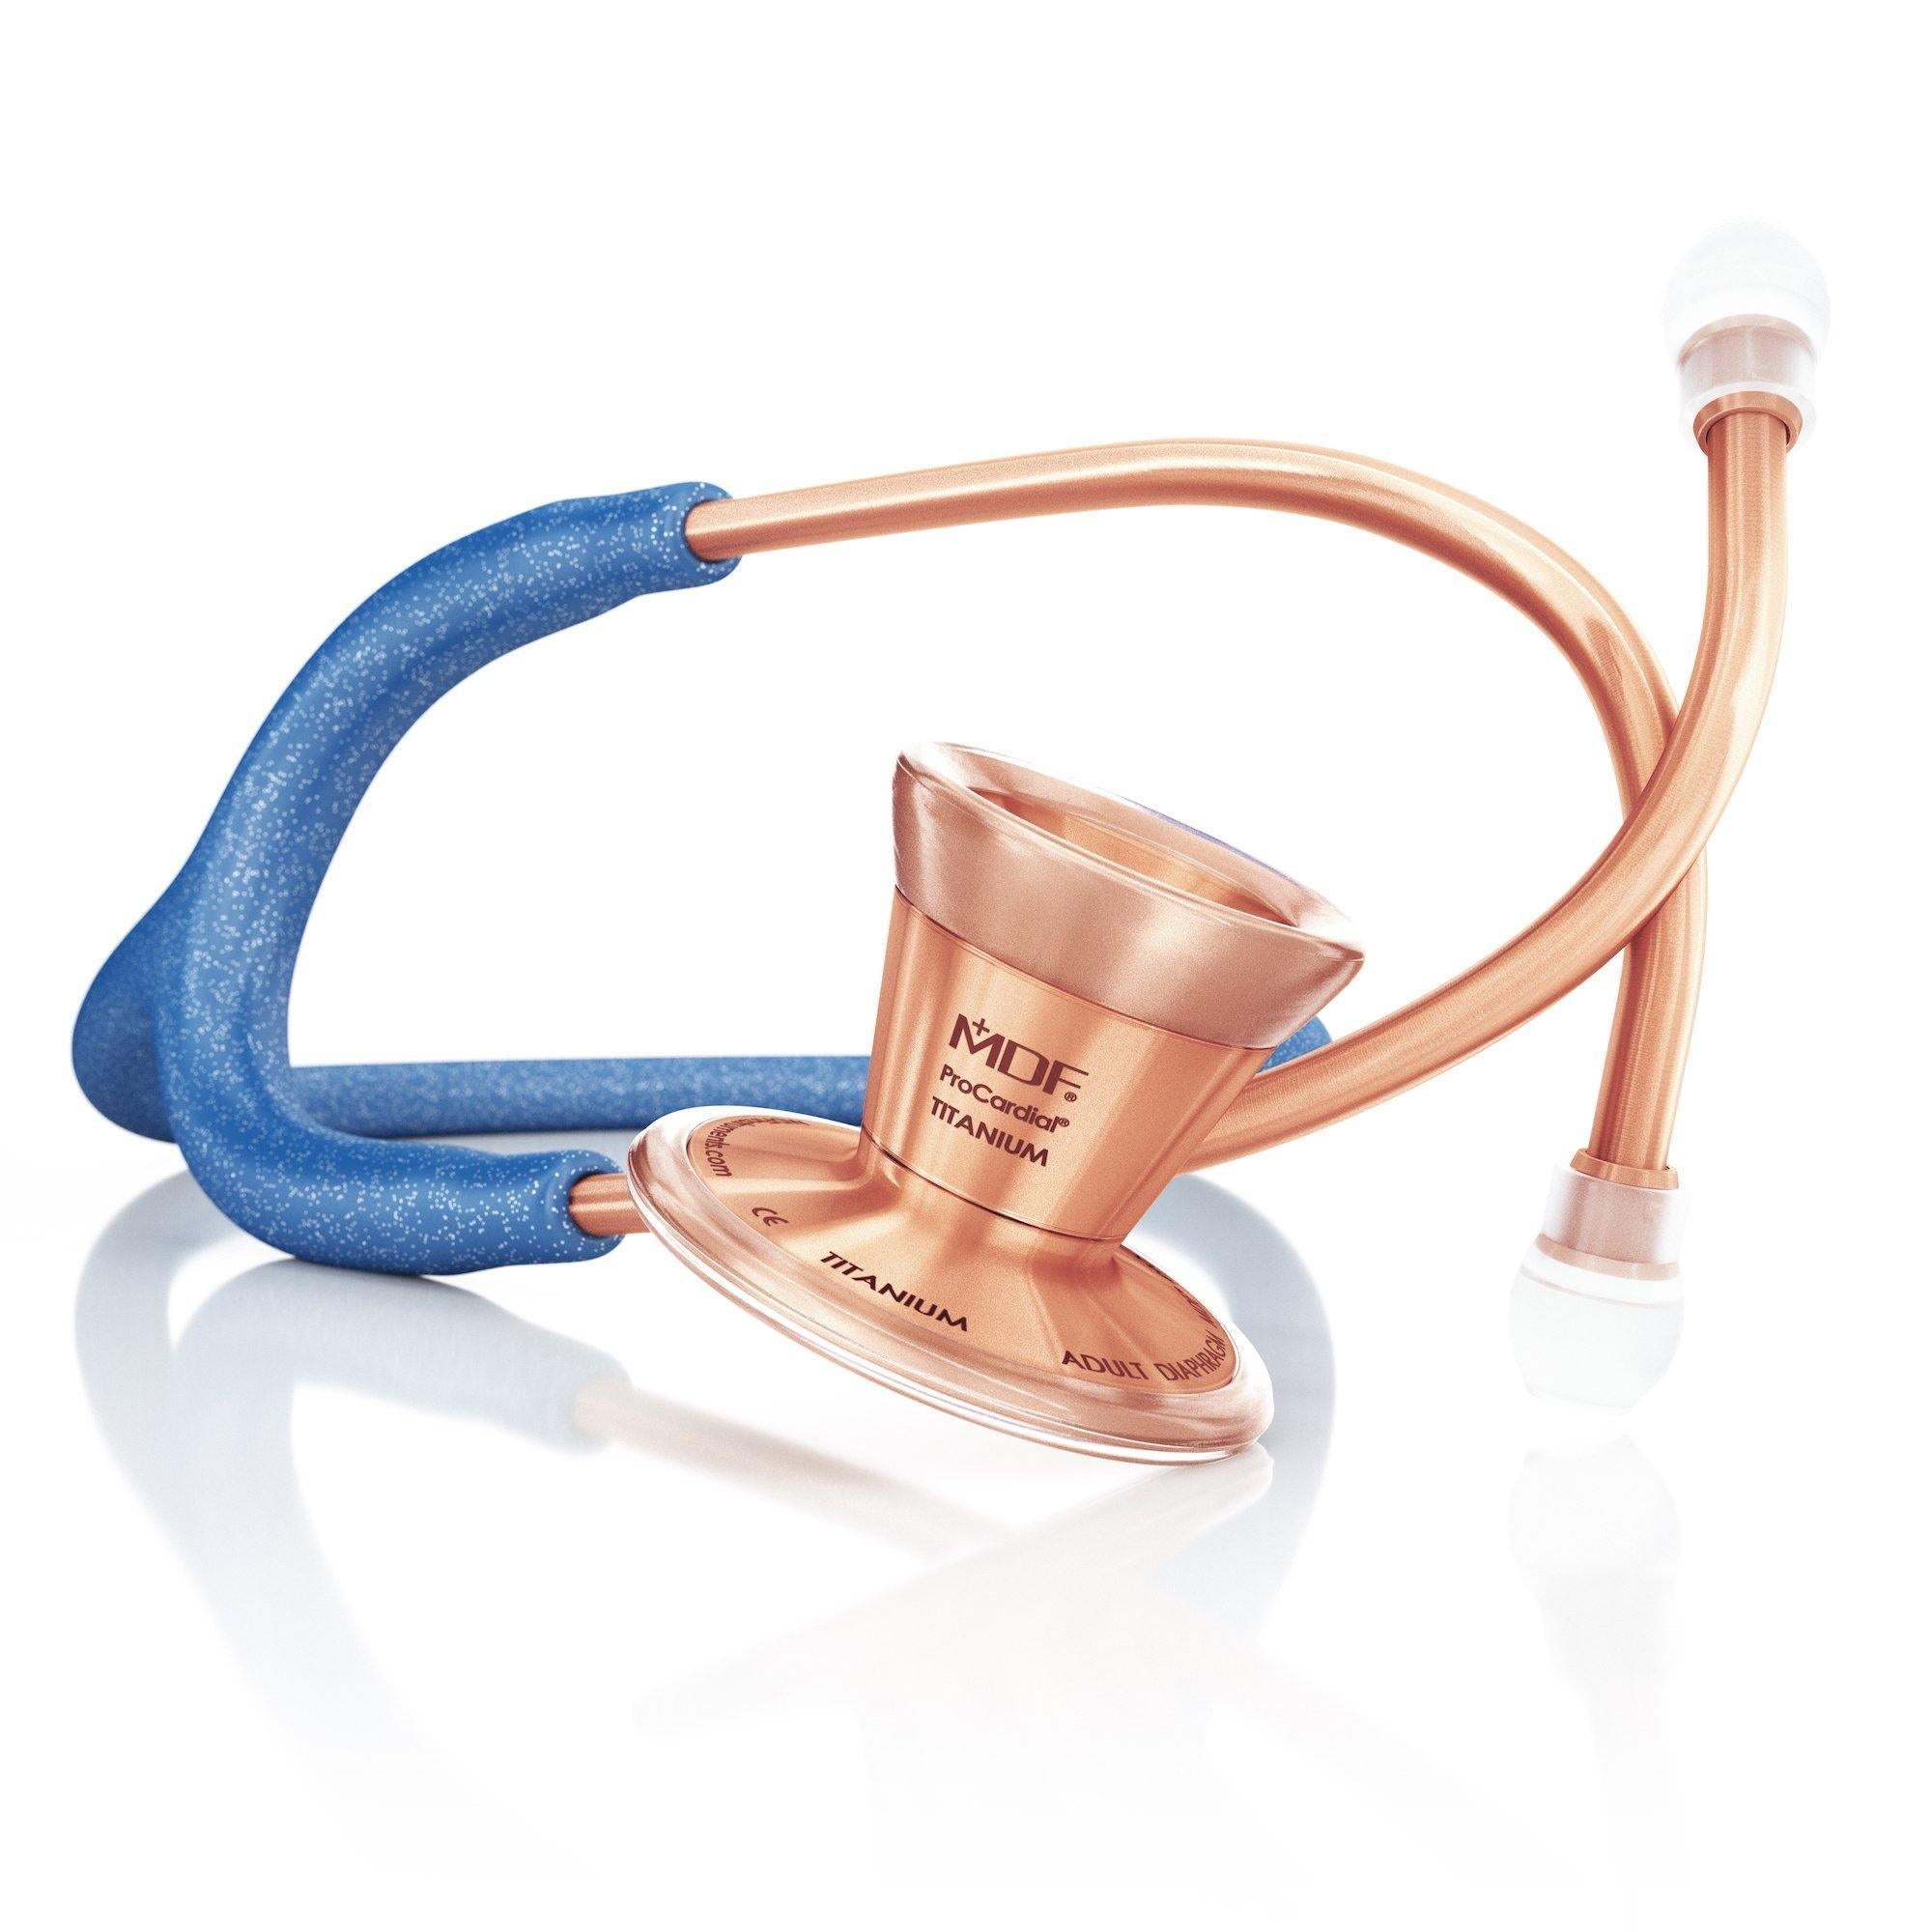 ProCardialå¨ Titanium Cardiology Stethoscope - Royal Blue Glitter/Rose Gold - MDF Instruments Official Store - No - Stethoscope